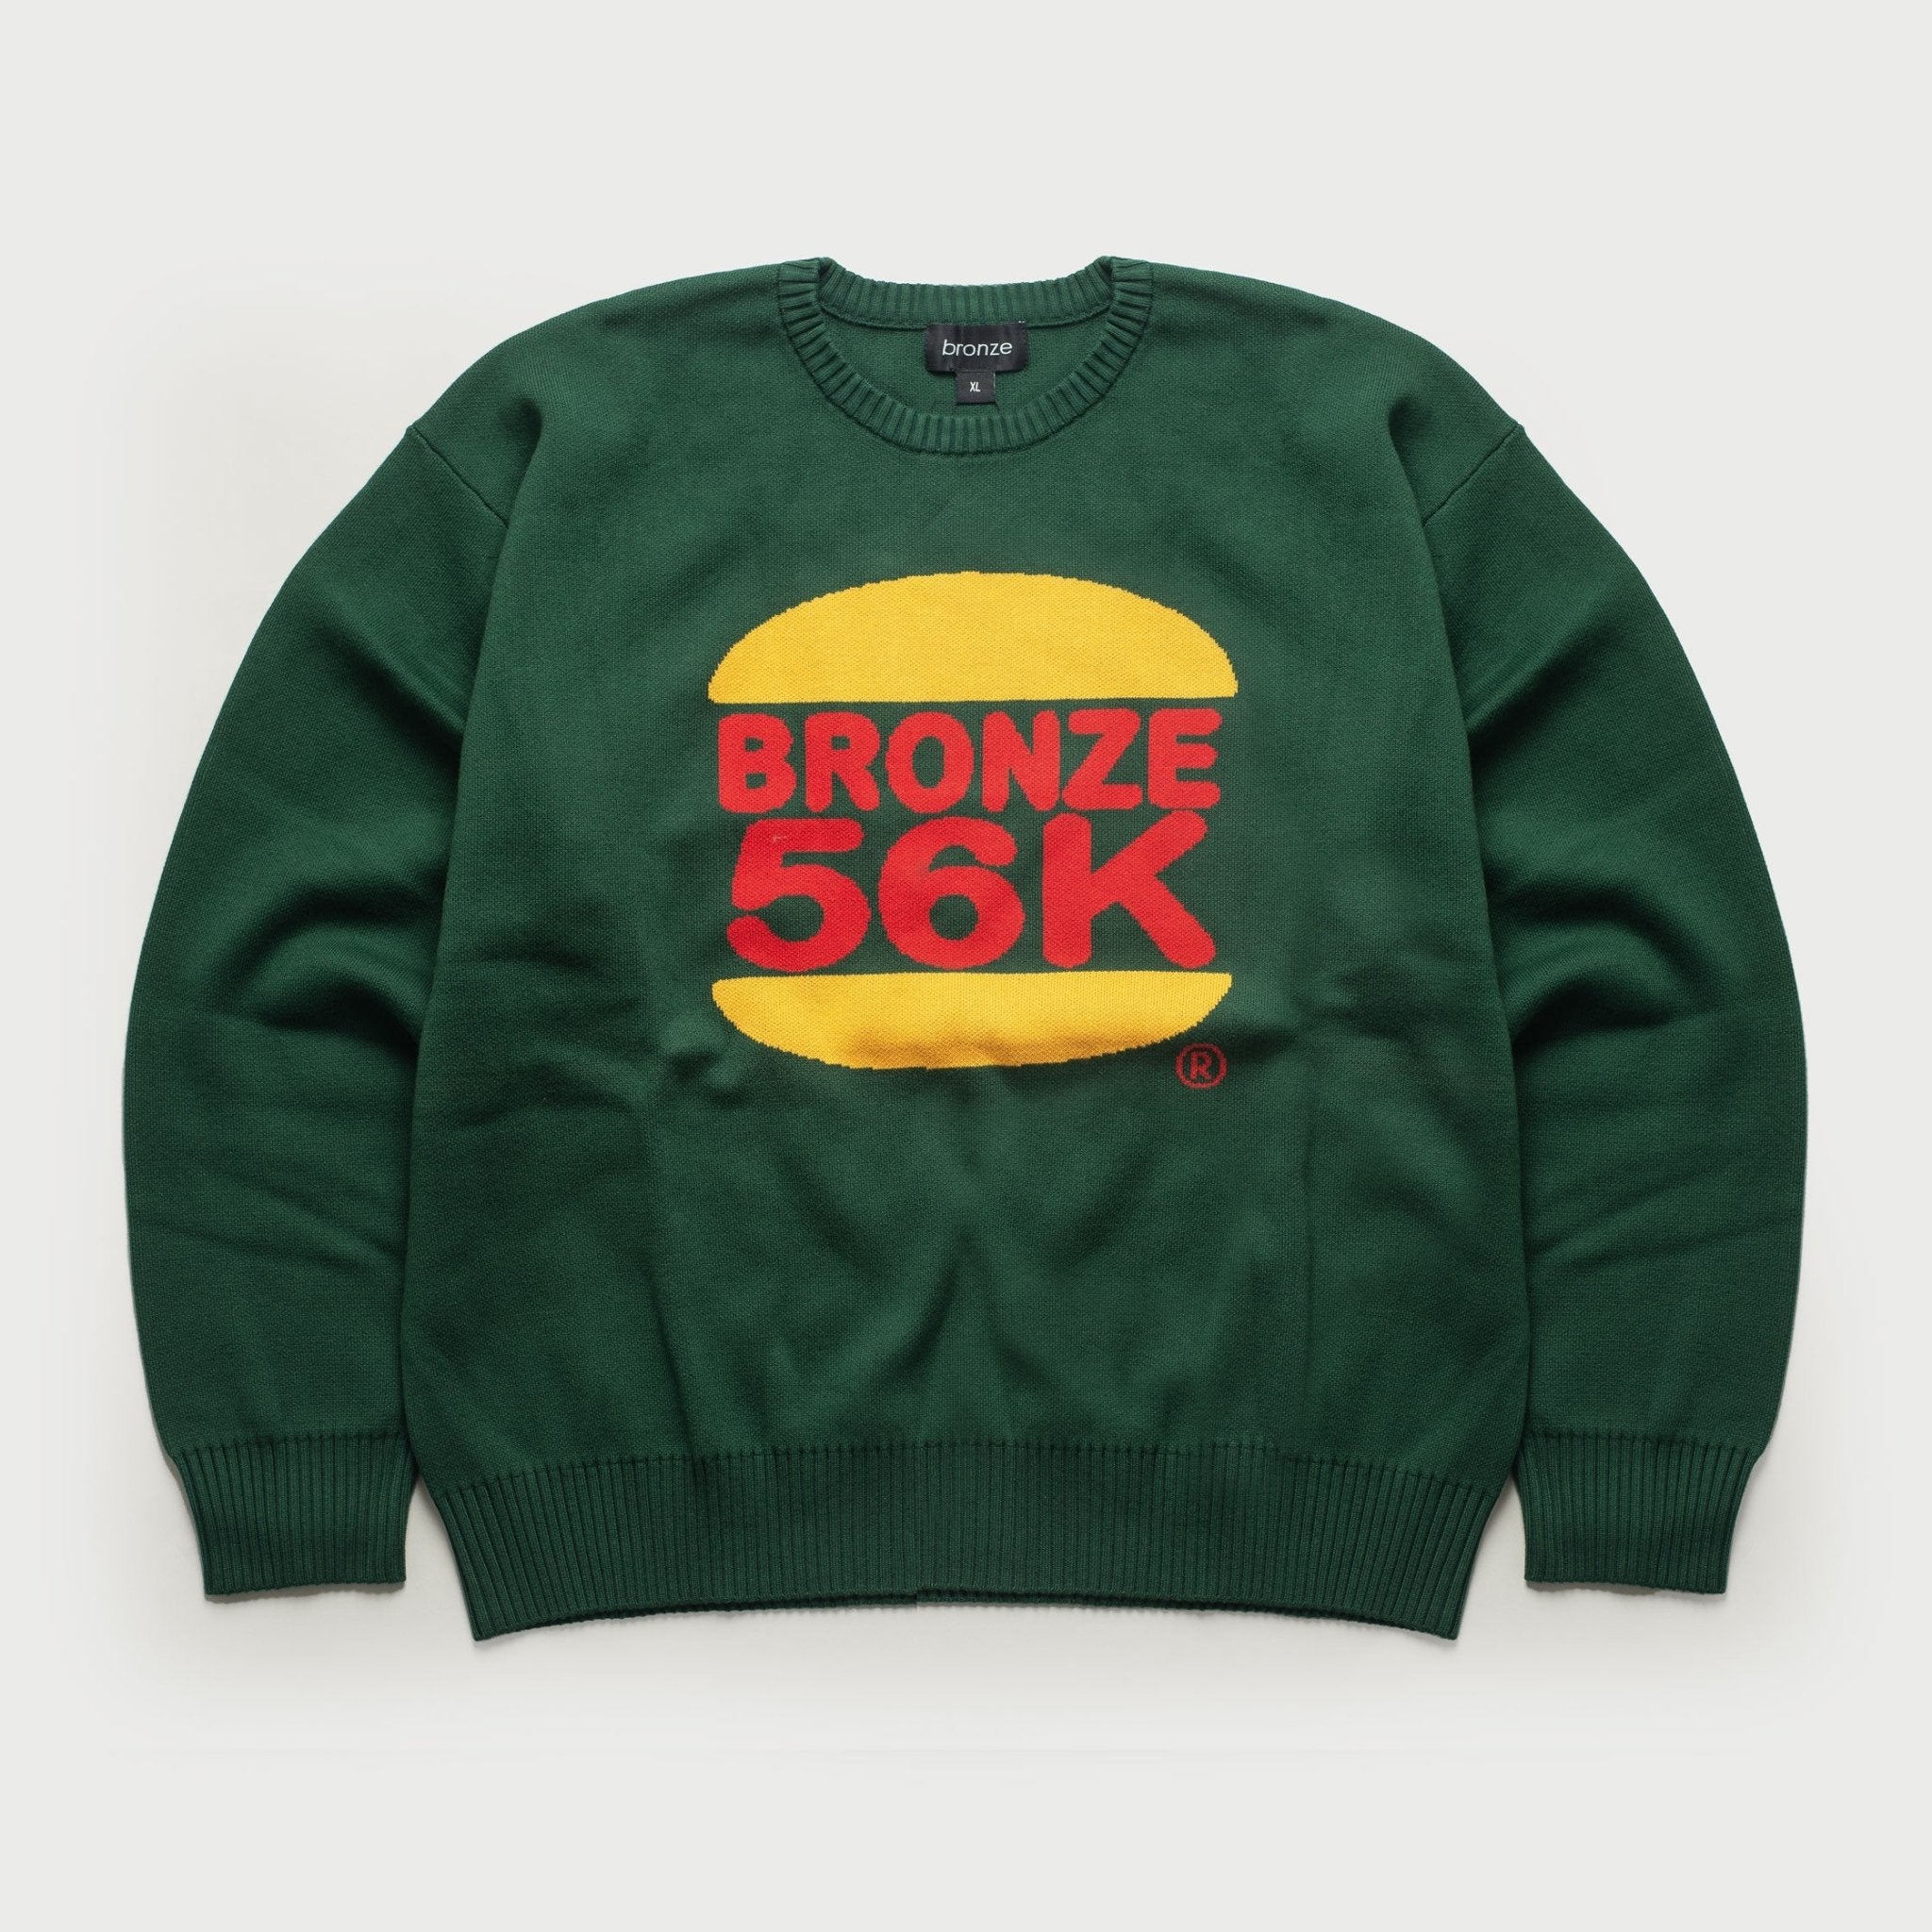 bronze 56k burger sweater